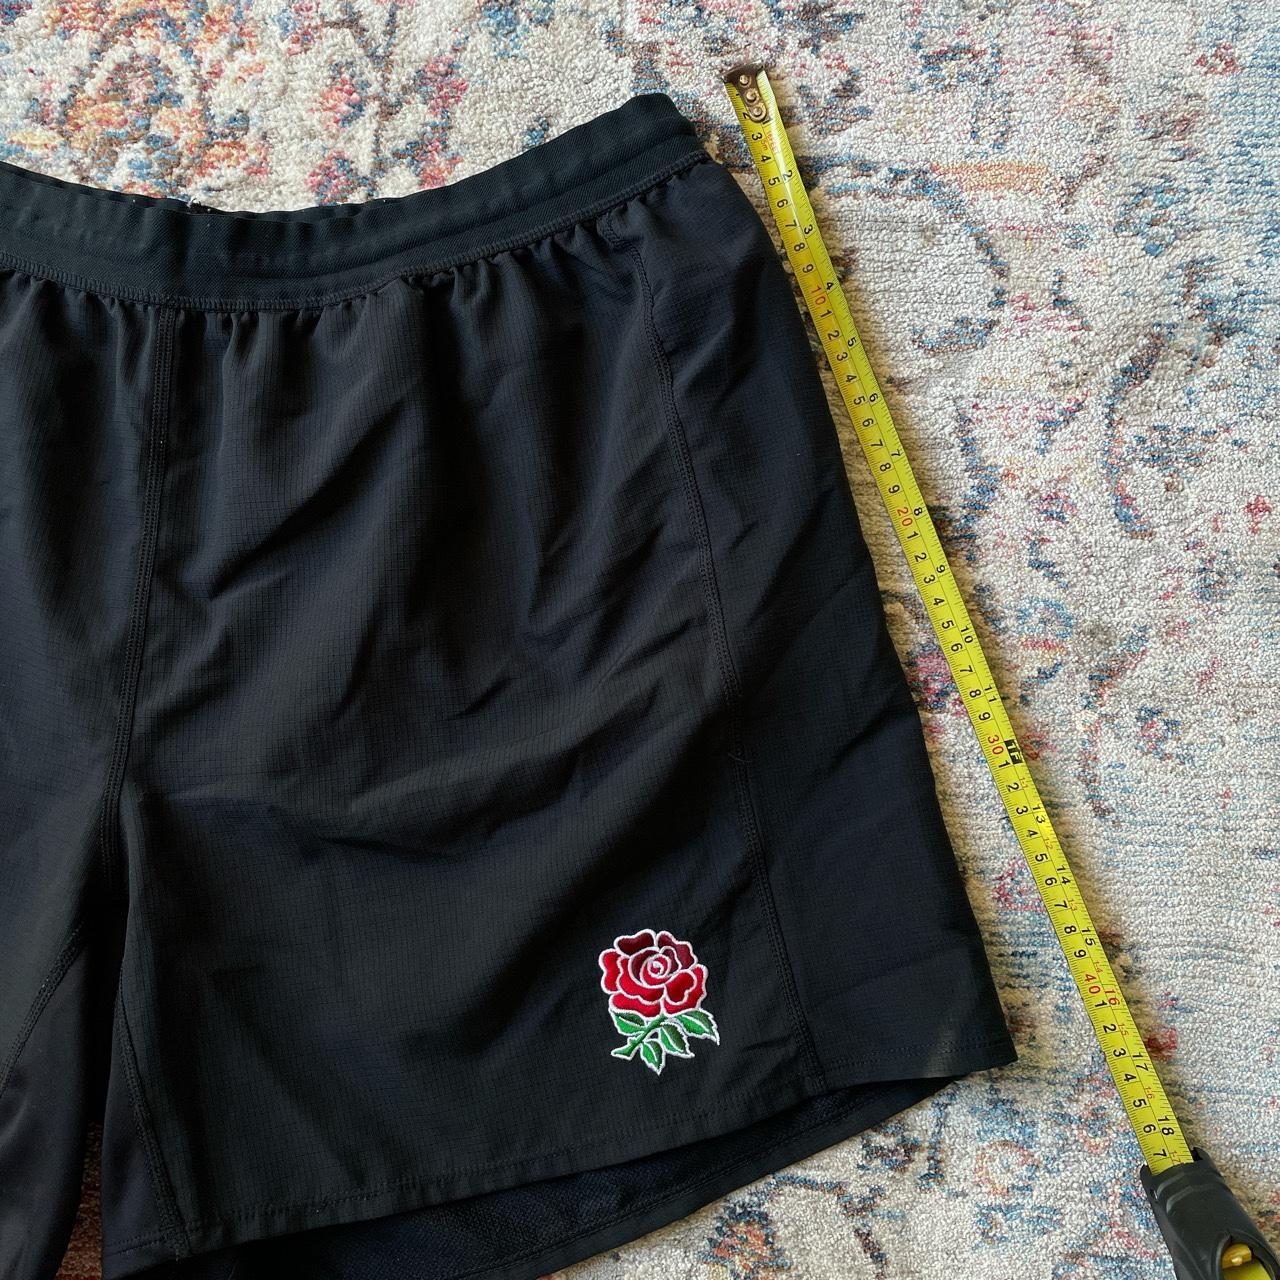 England Rugby Canterbury Black Shorts